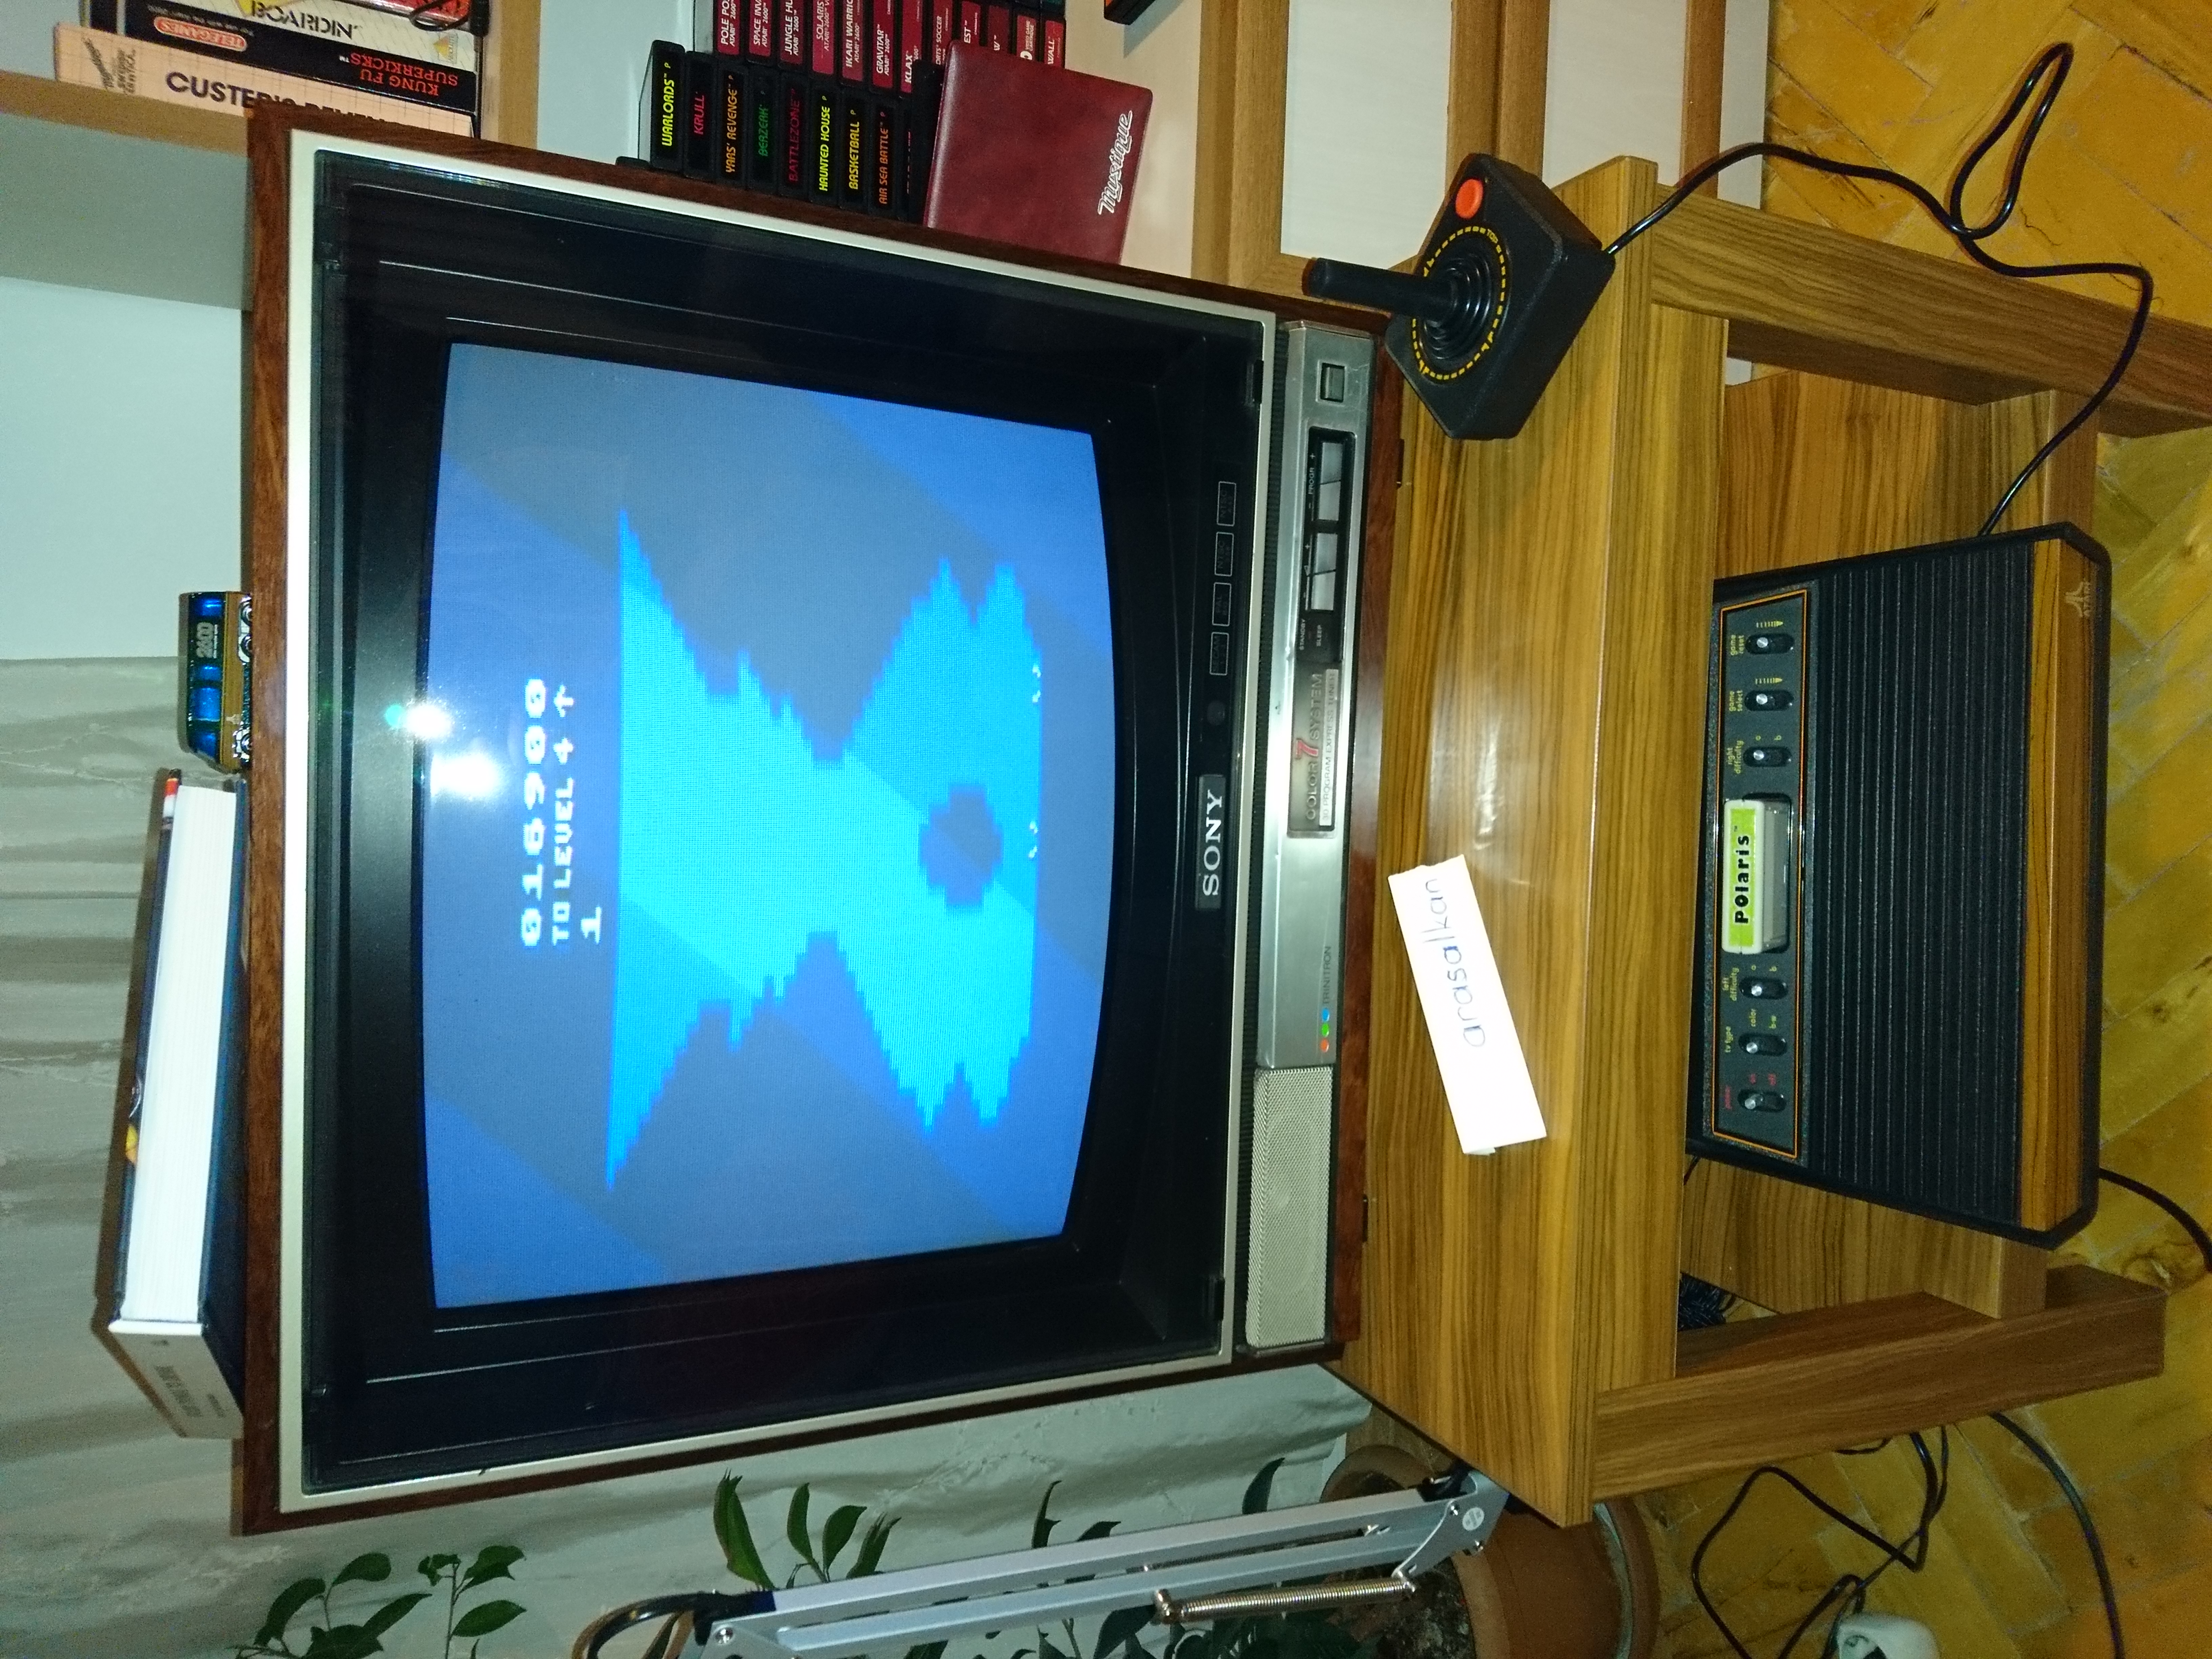 arasalkan: Polaris (Atari 2600 Expert/A) 16,900 points on 2017-12-10 12:53:41